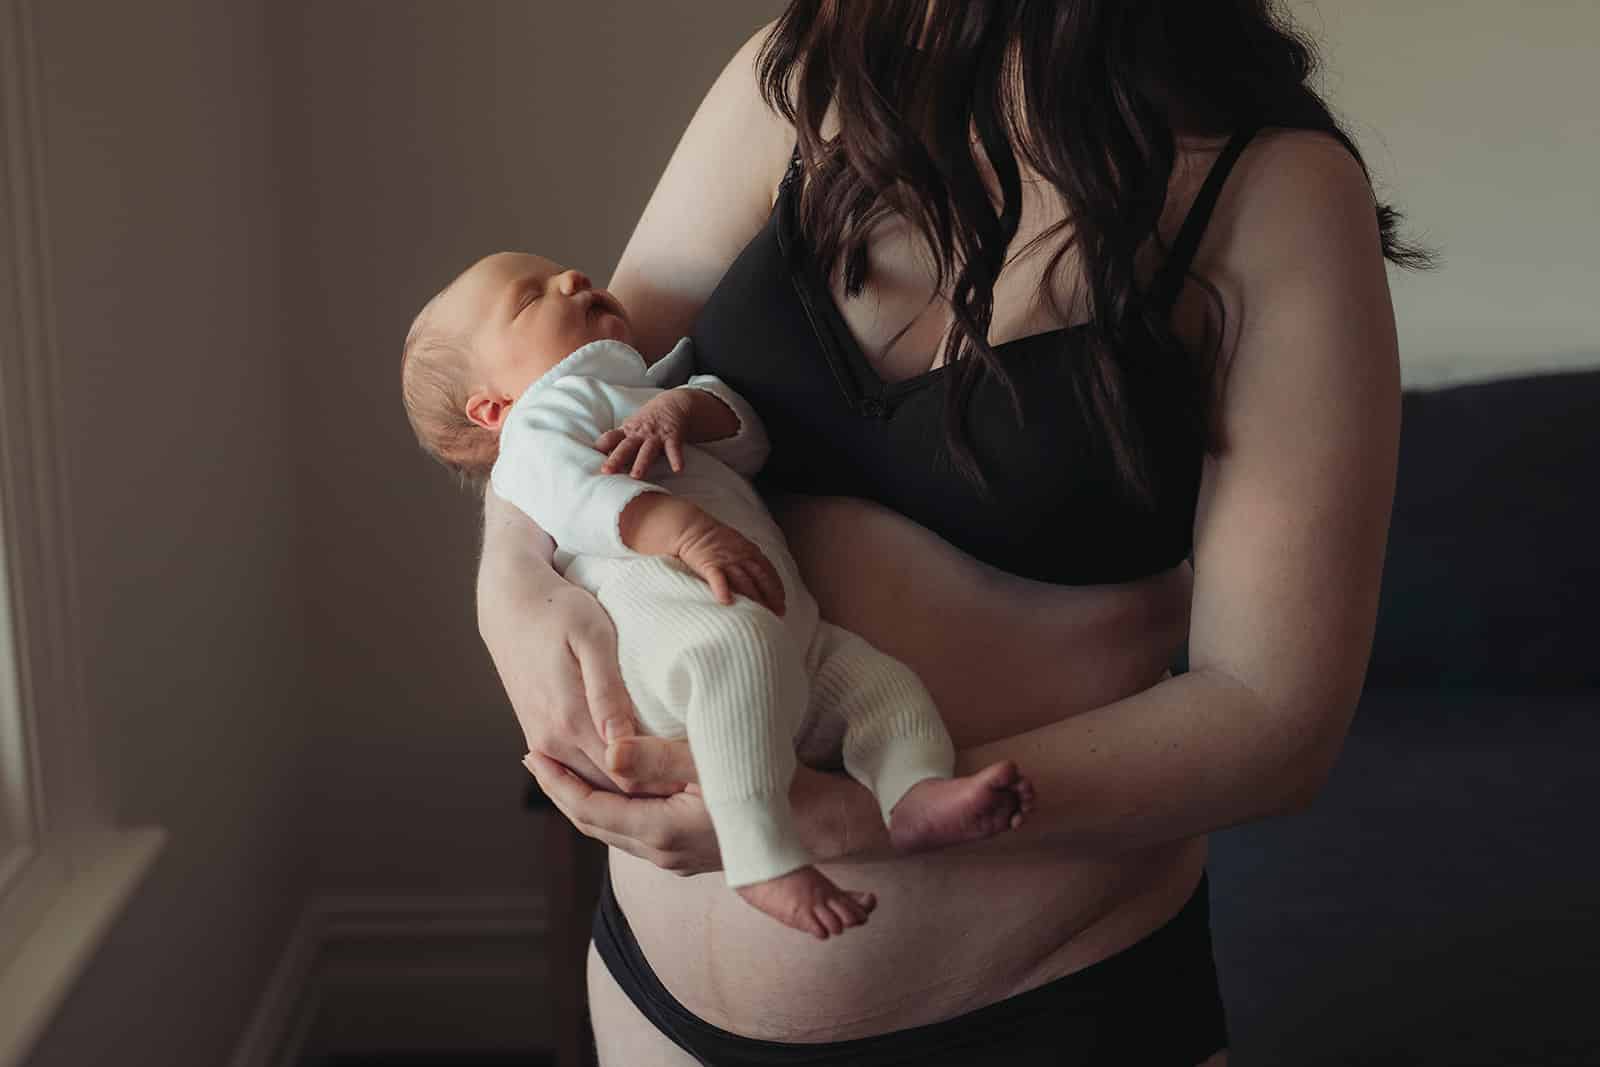 Georgia caesarean birth recovery